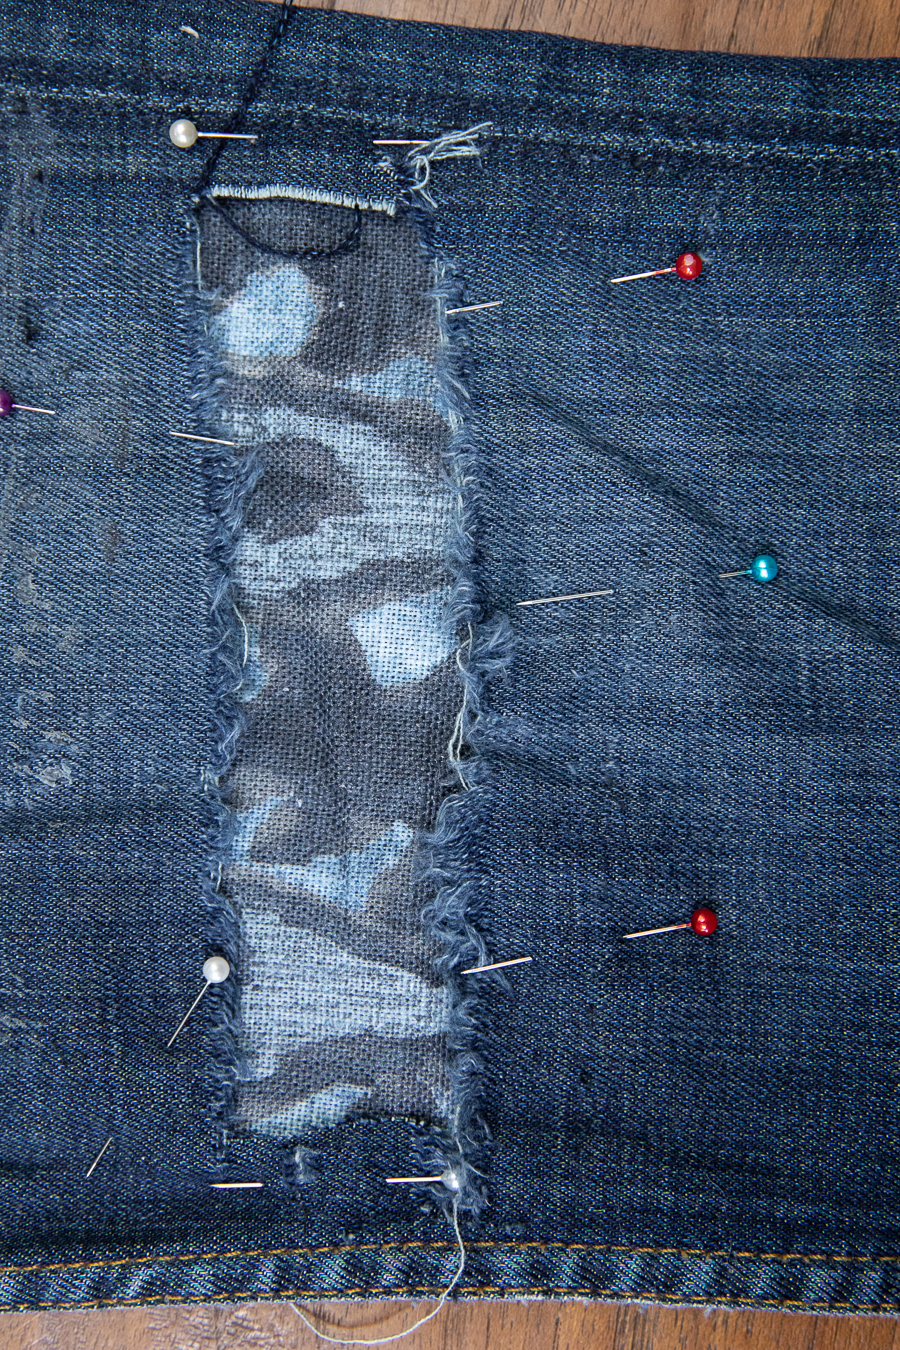 make-art-life-boro-sashiko-jeans-patch-7